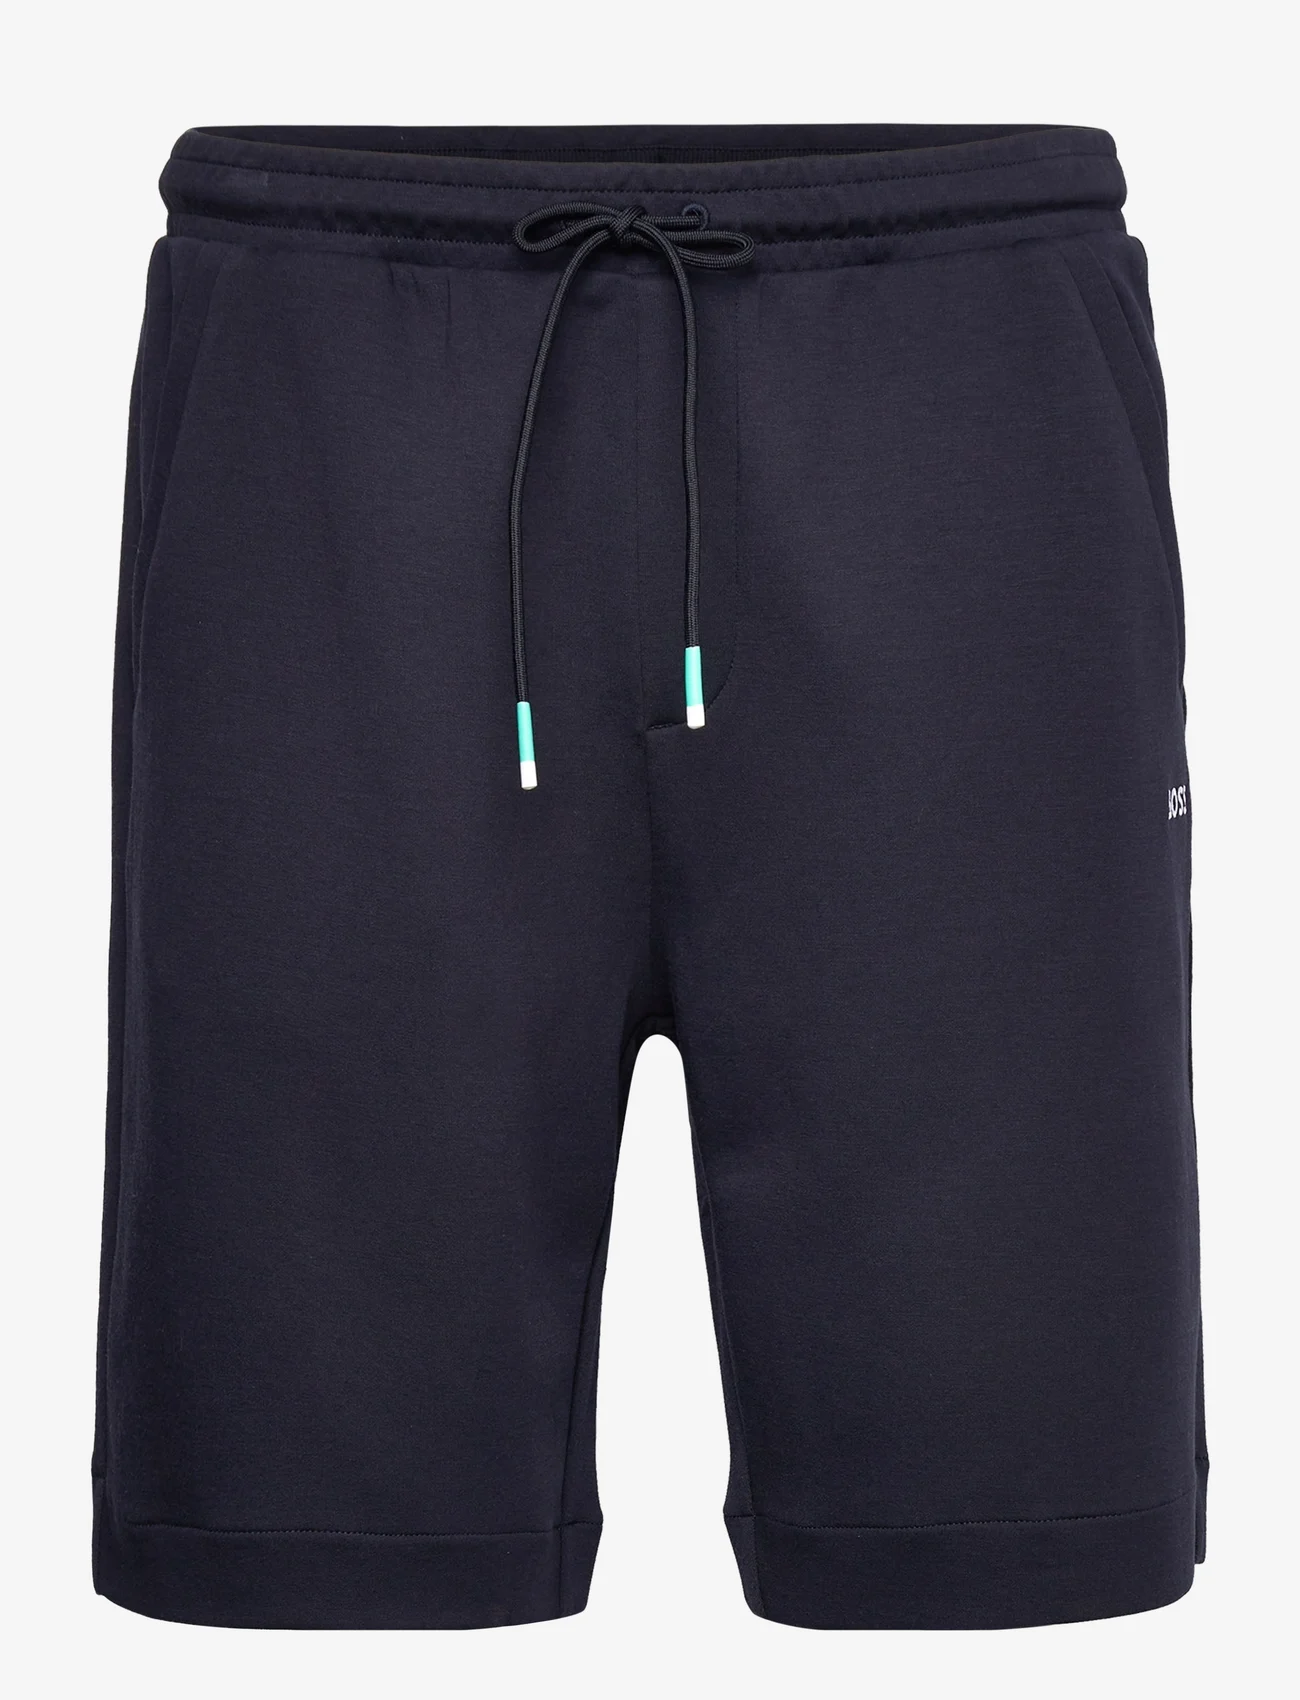 BOSS - Headlo 1 - sports shorts - dark blue - 0